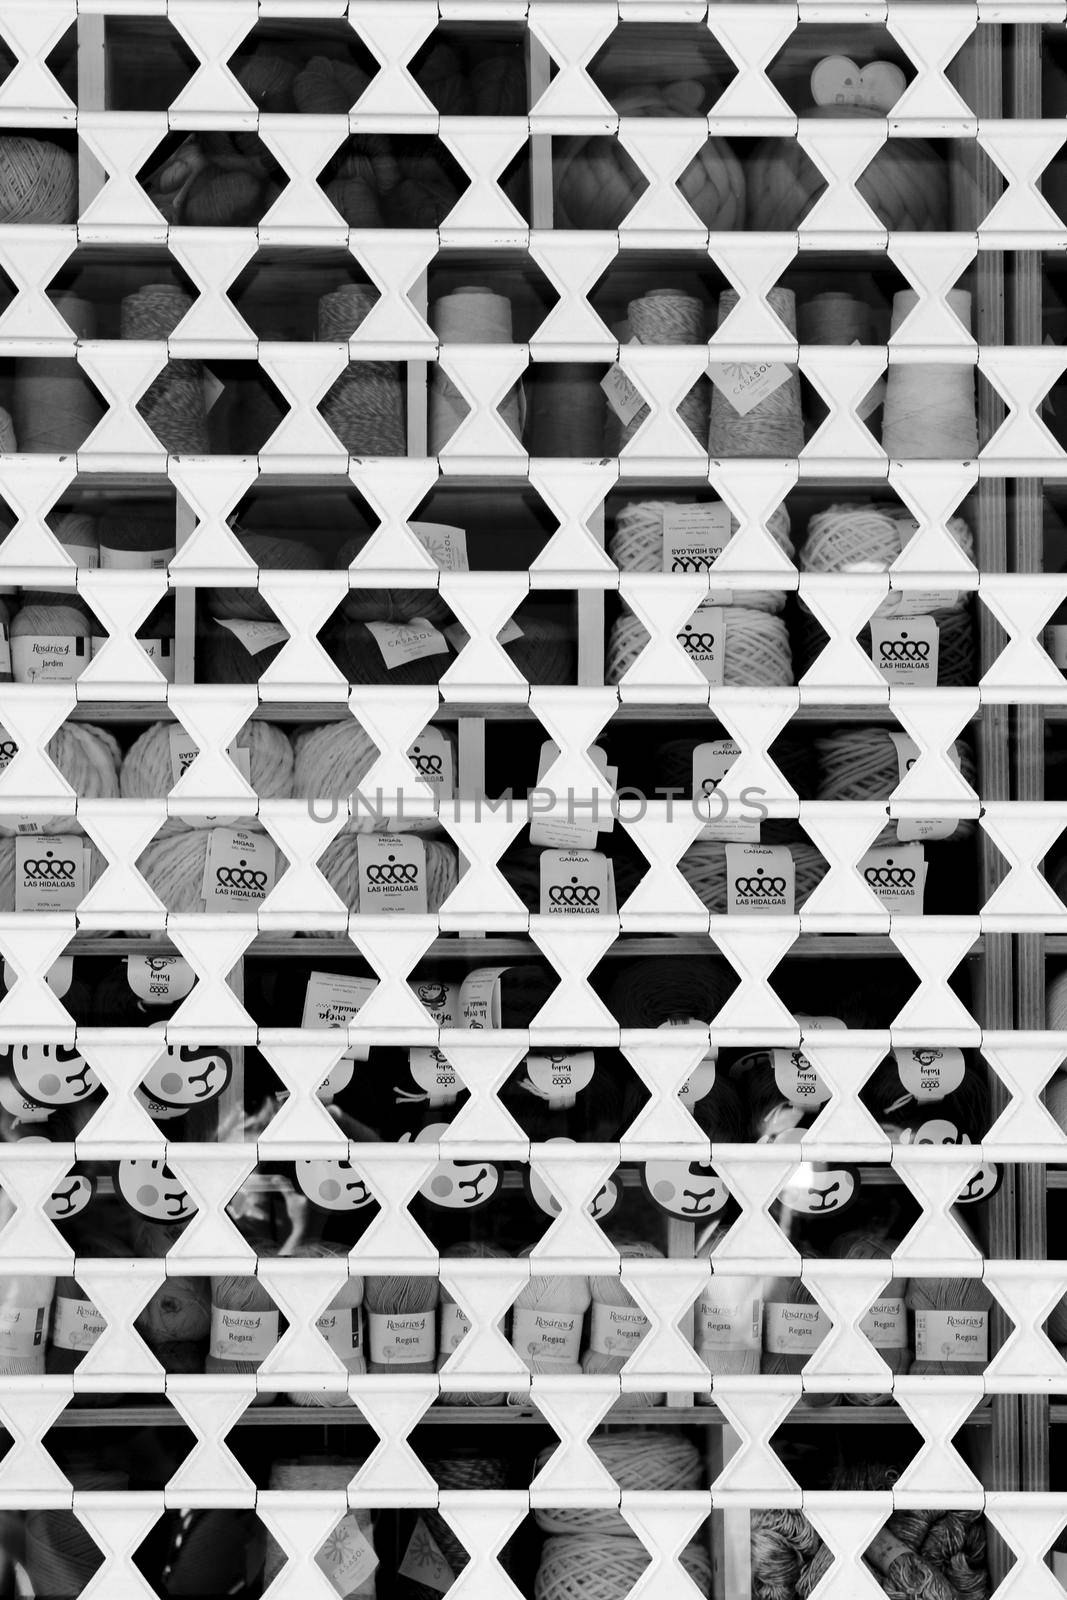 Closed shop showcase blind pattern in Spain by soniabonet